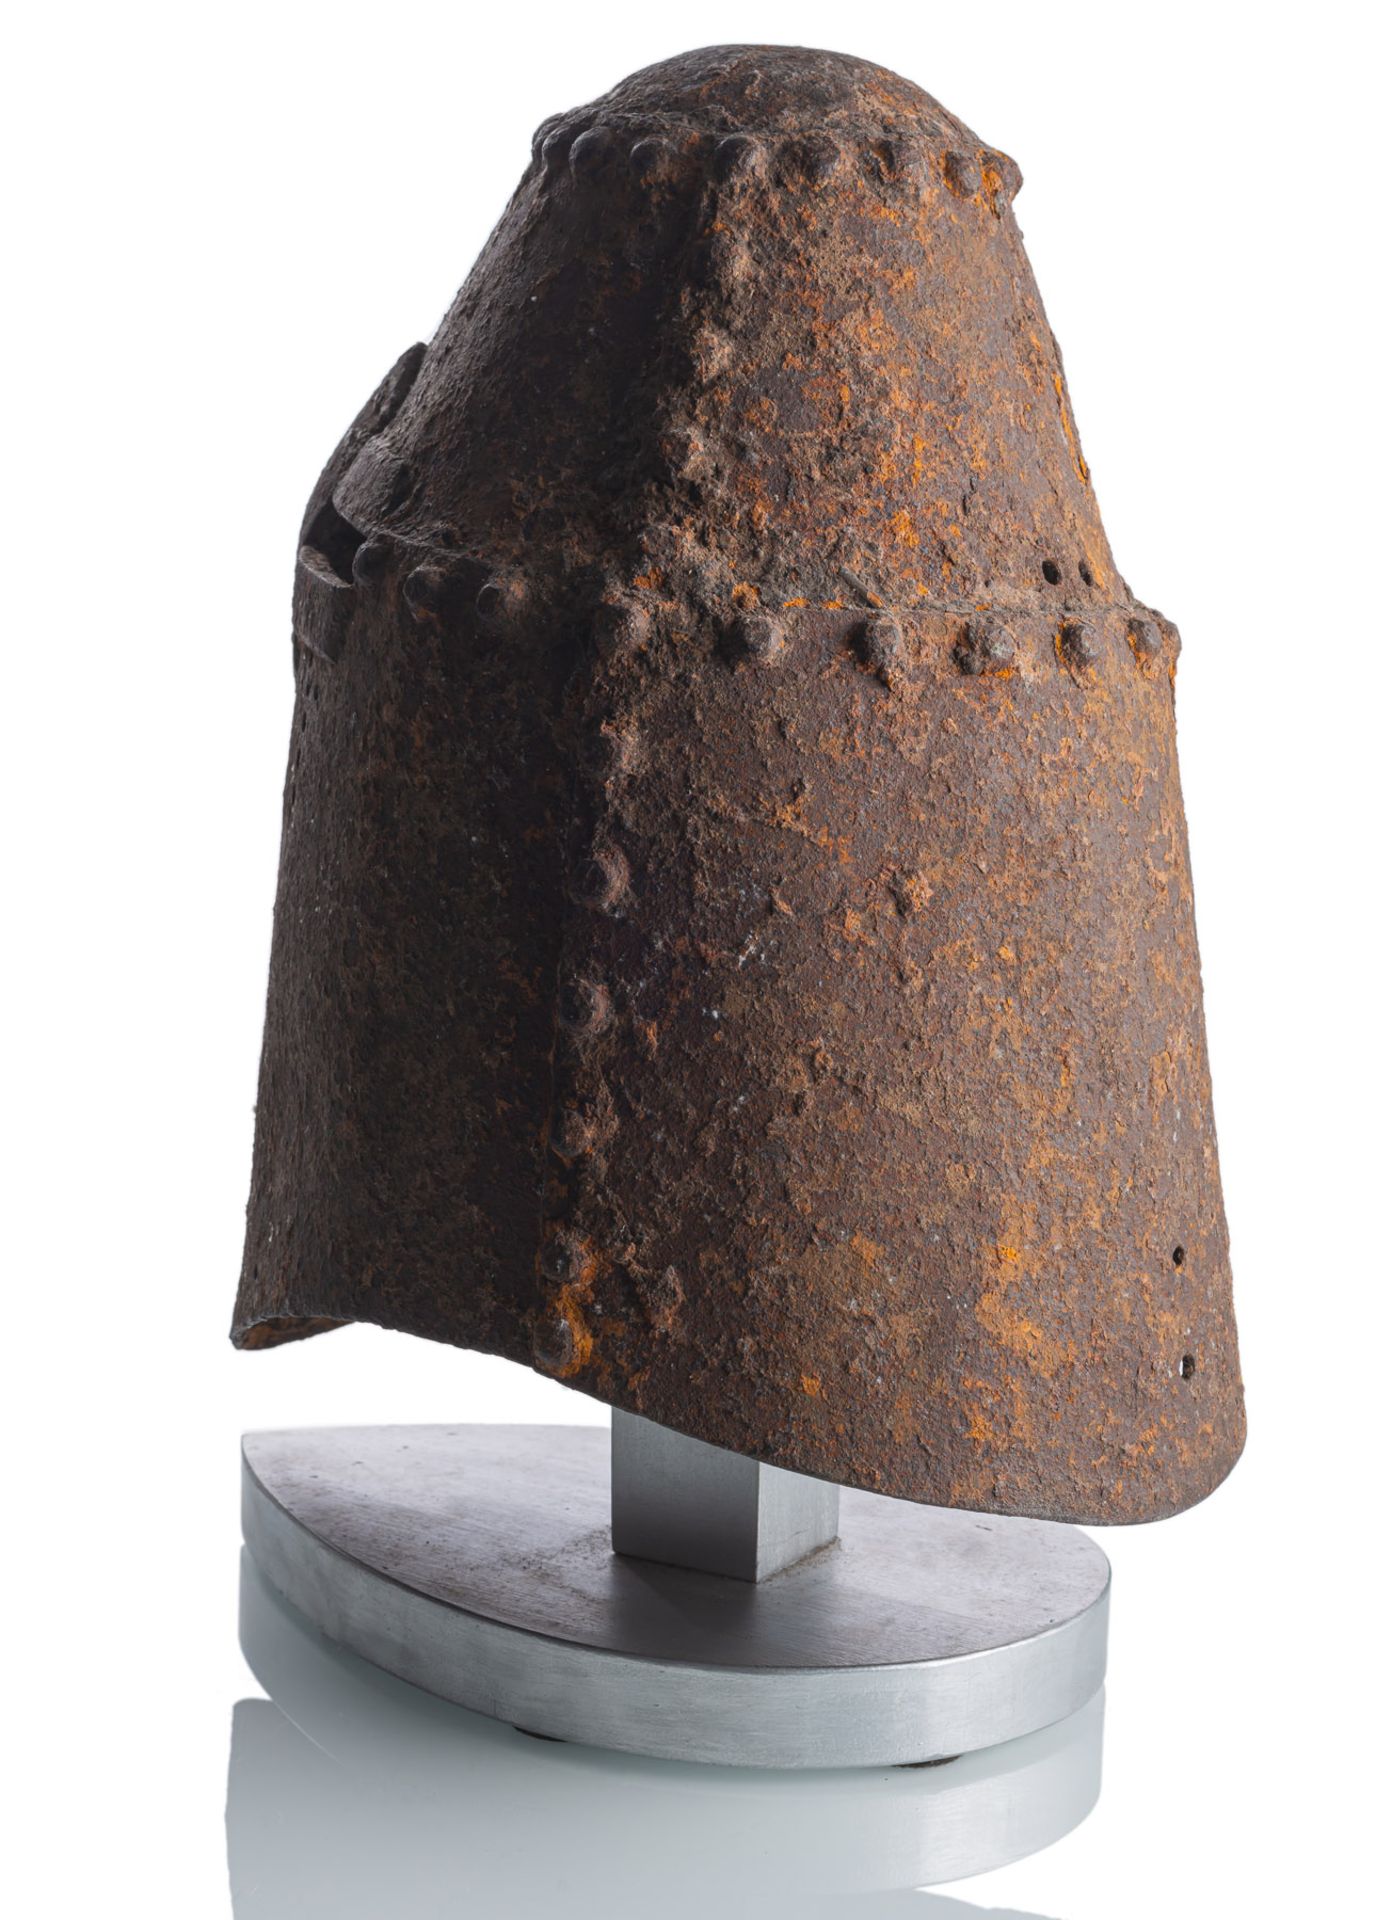 Medieval Bucket Helm - Image 3 of 3